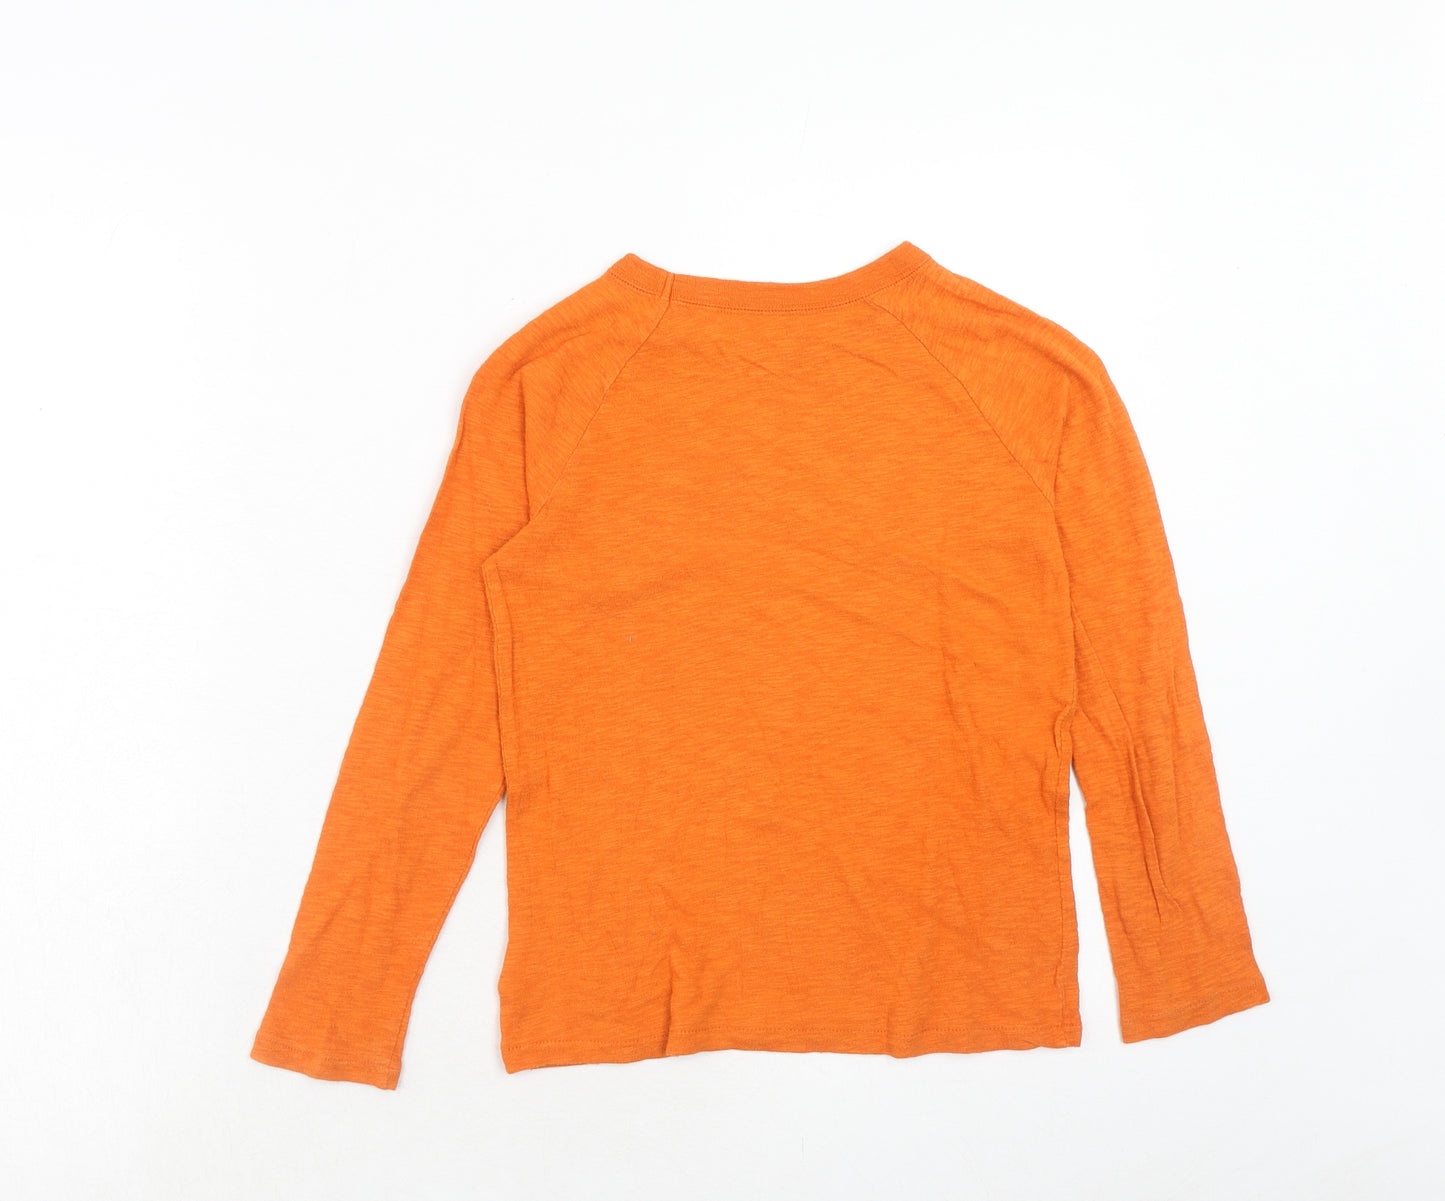 Gap Boys Orange Cotton Basic Casual Size 6-7 Years Round Neck Pullover